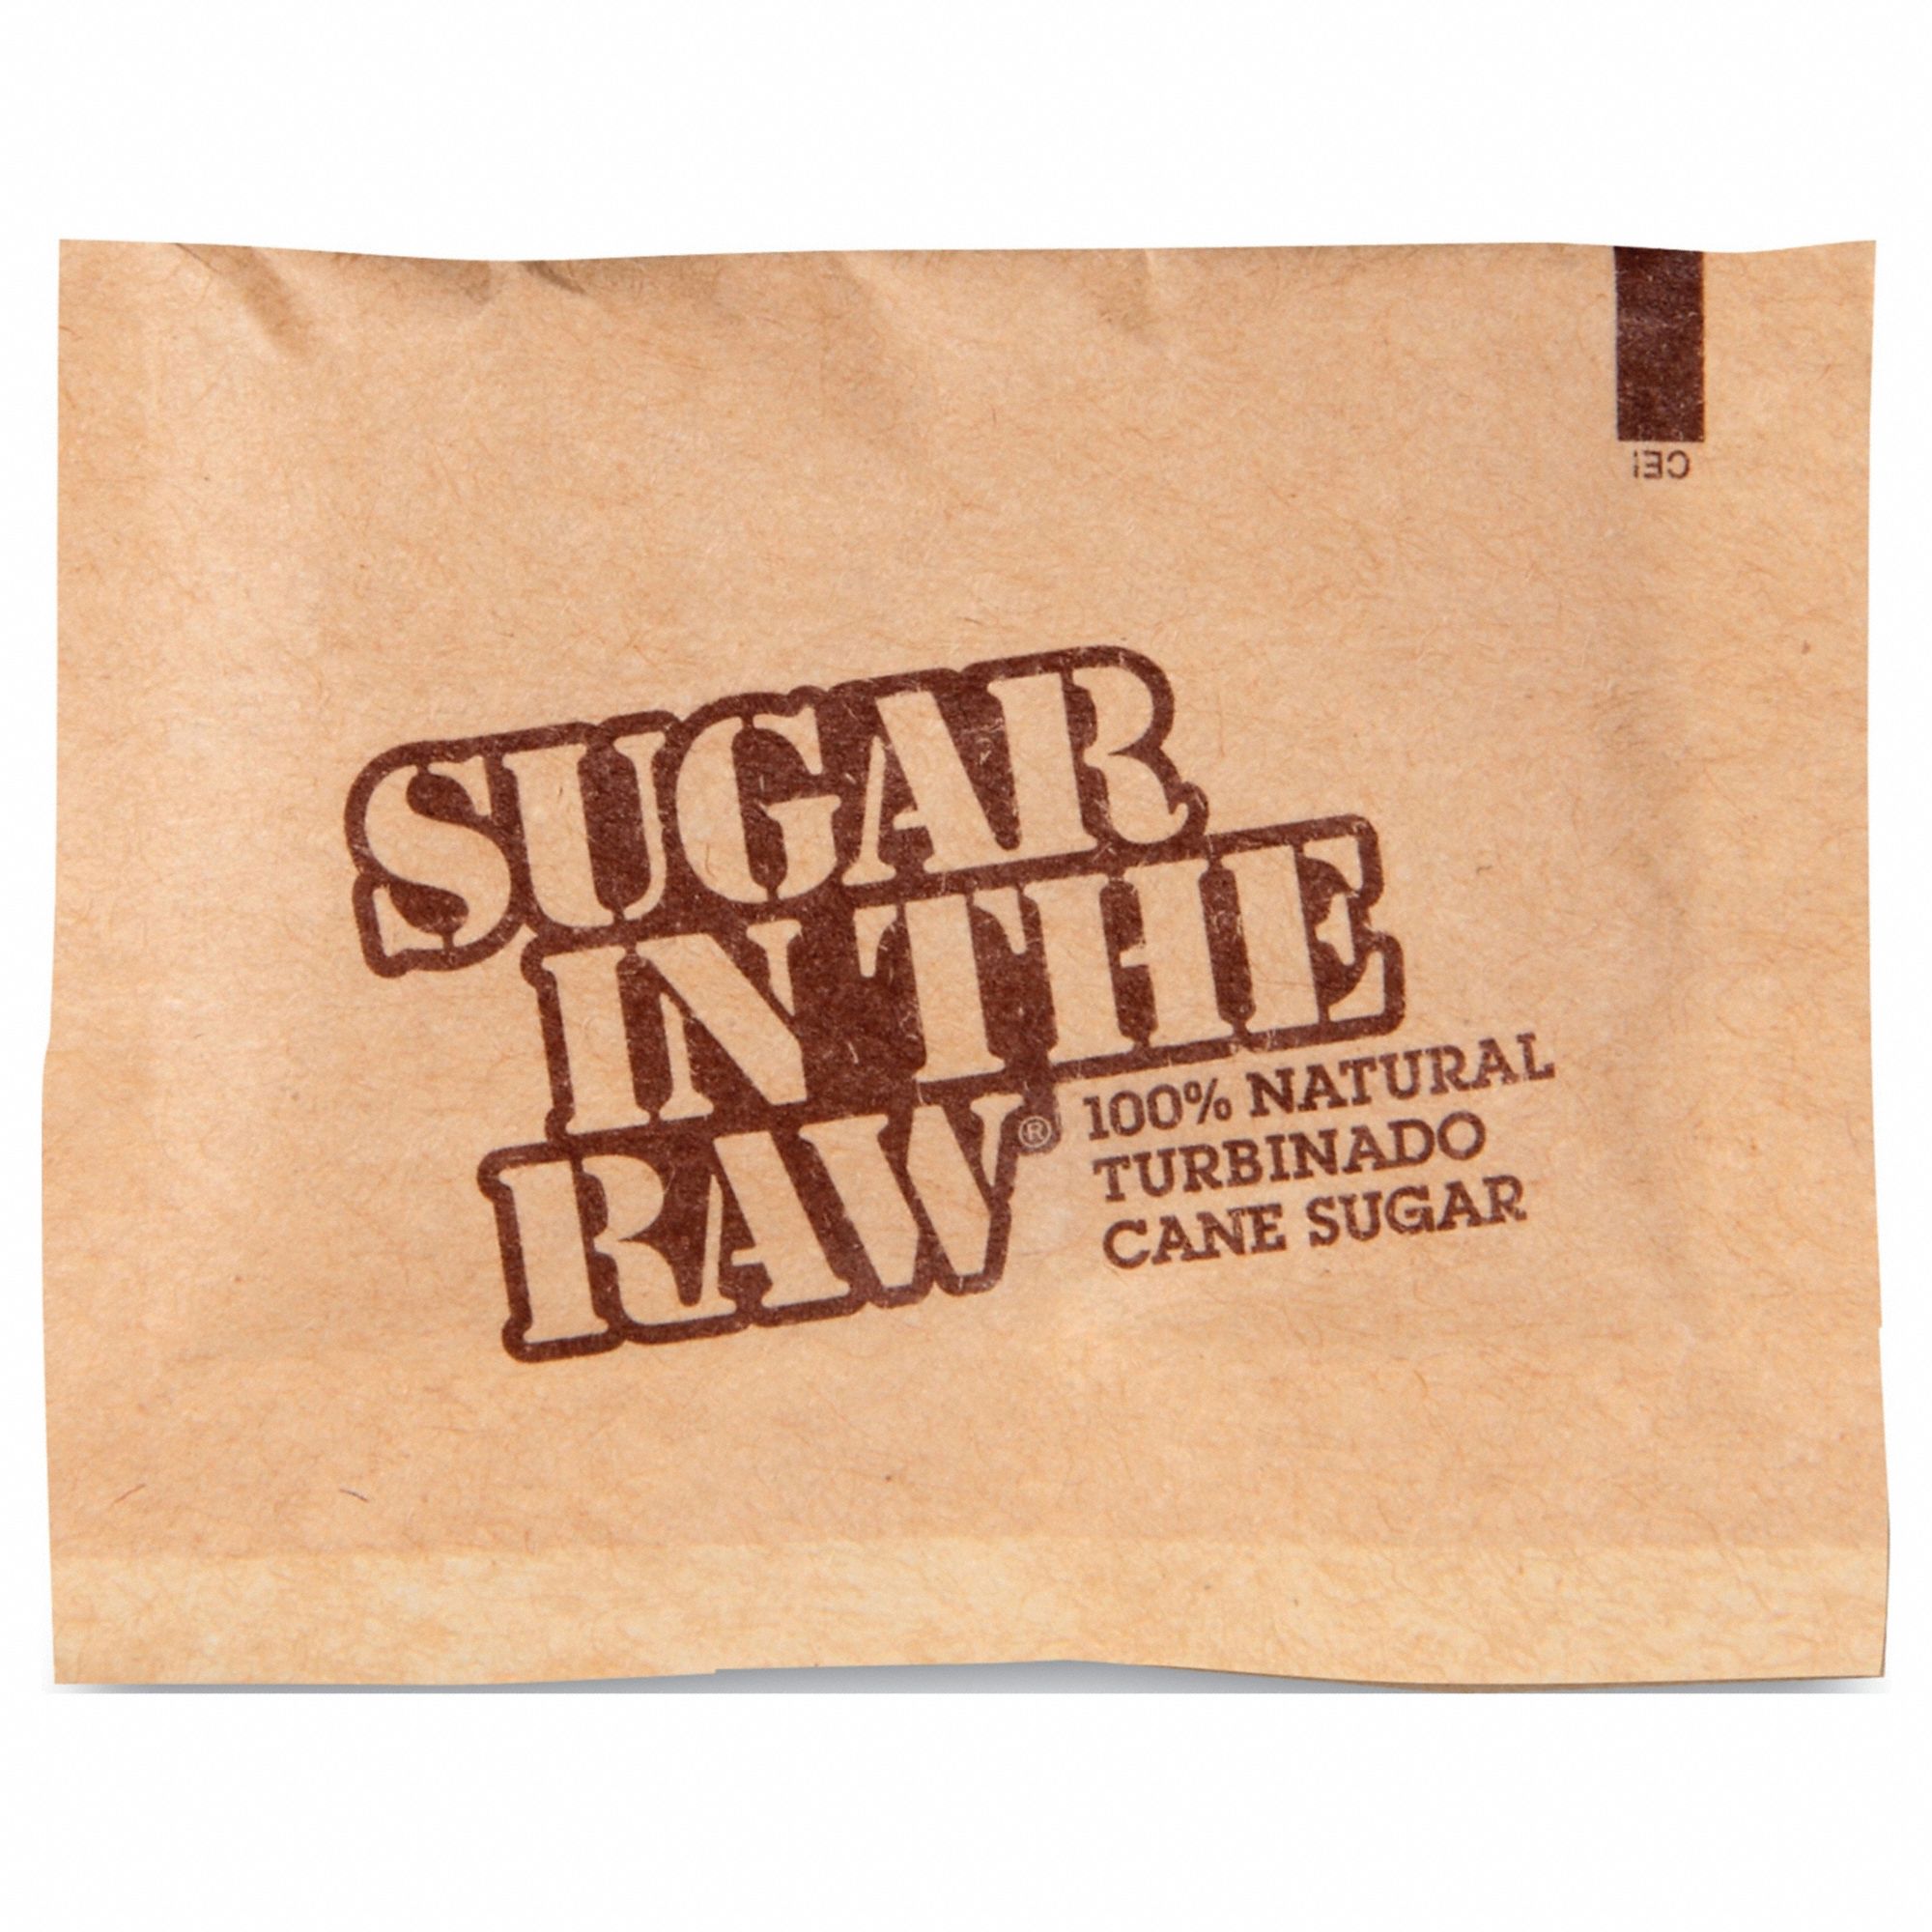 Sugar Packet: 0.20 oz, 400 PK